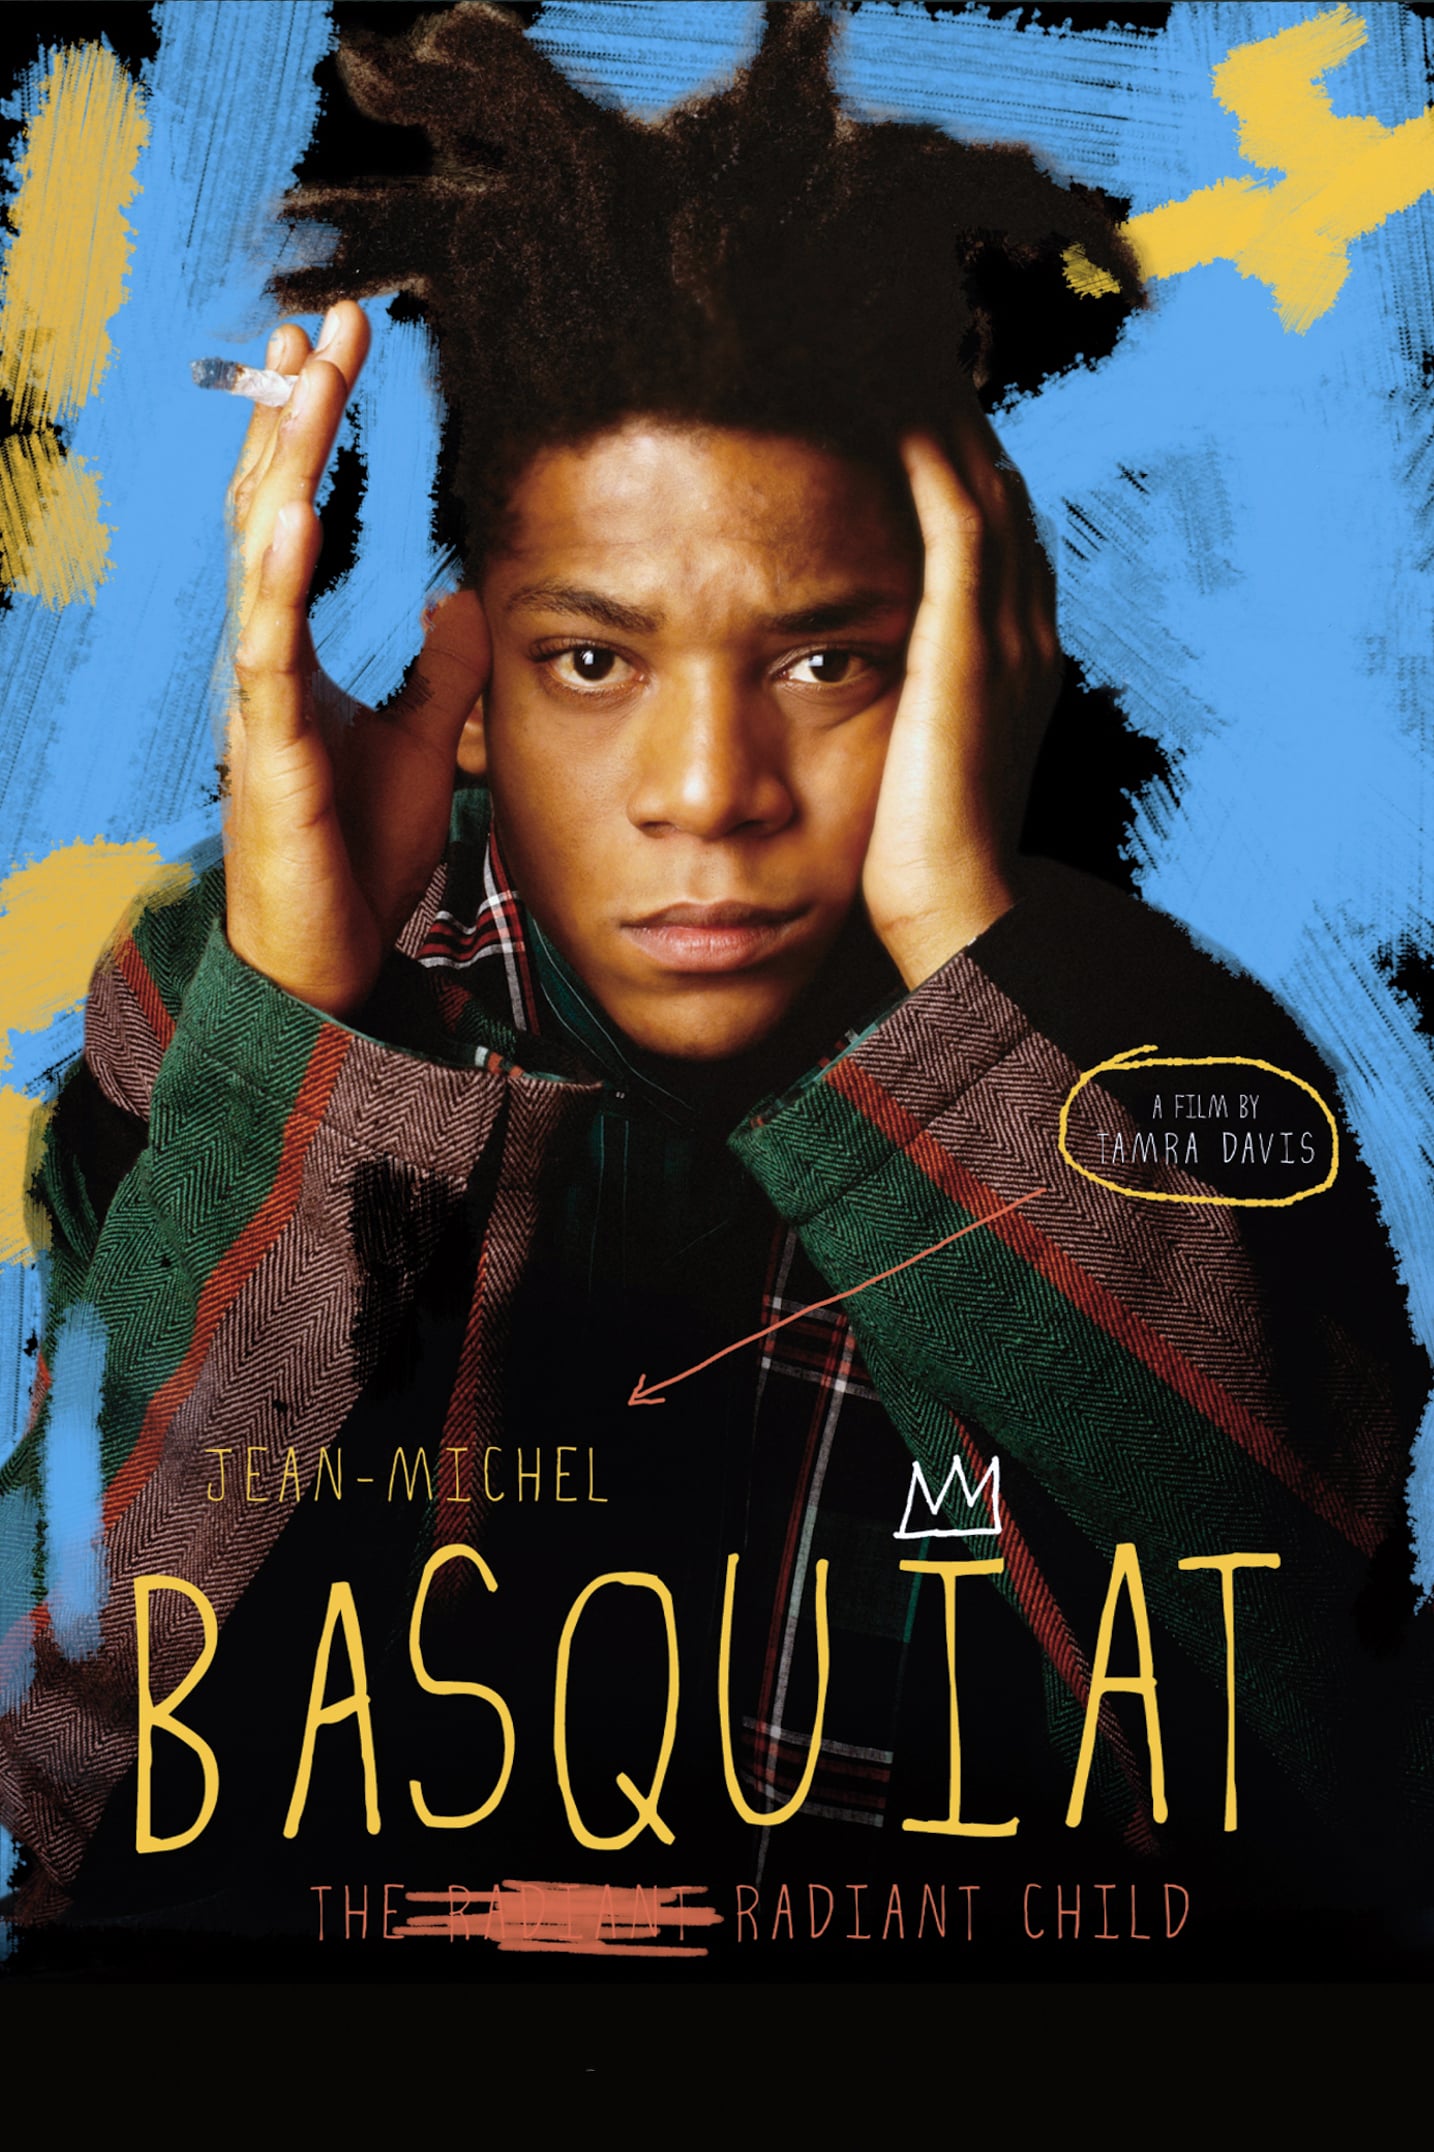 Caratula de Jean-Michel Basquiat: The Radiant Child (JEAN-MICHEL BASQUIAT) 